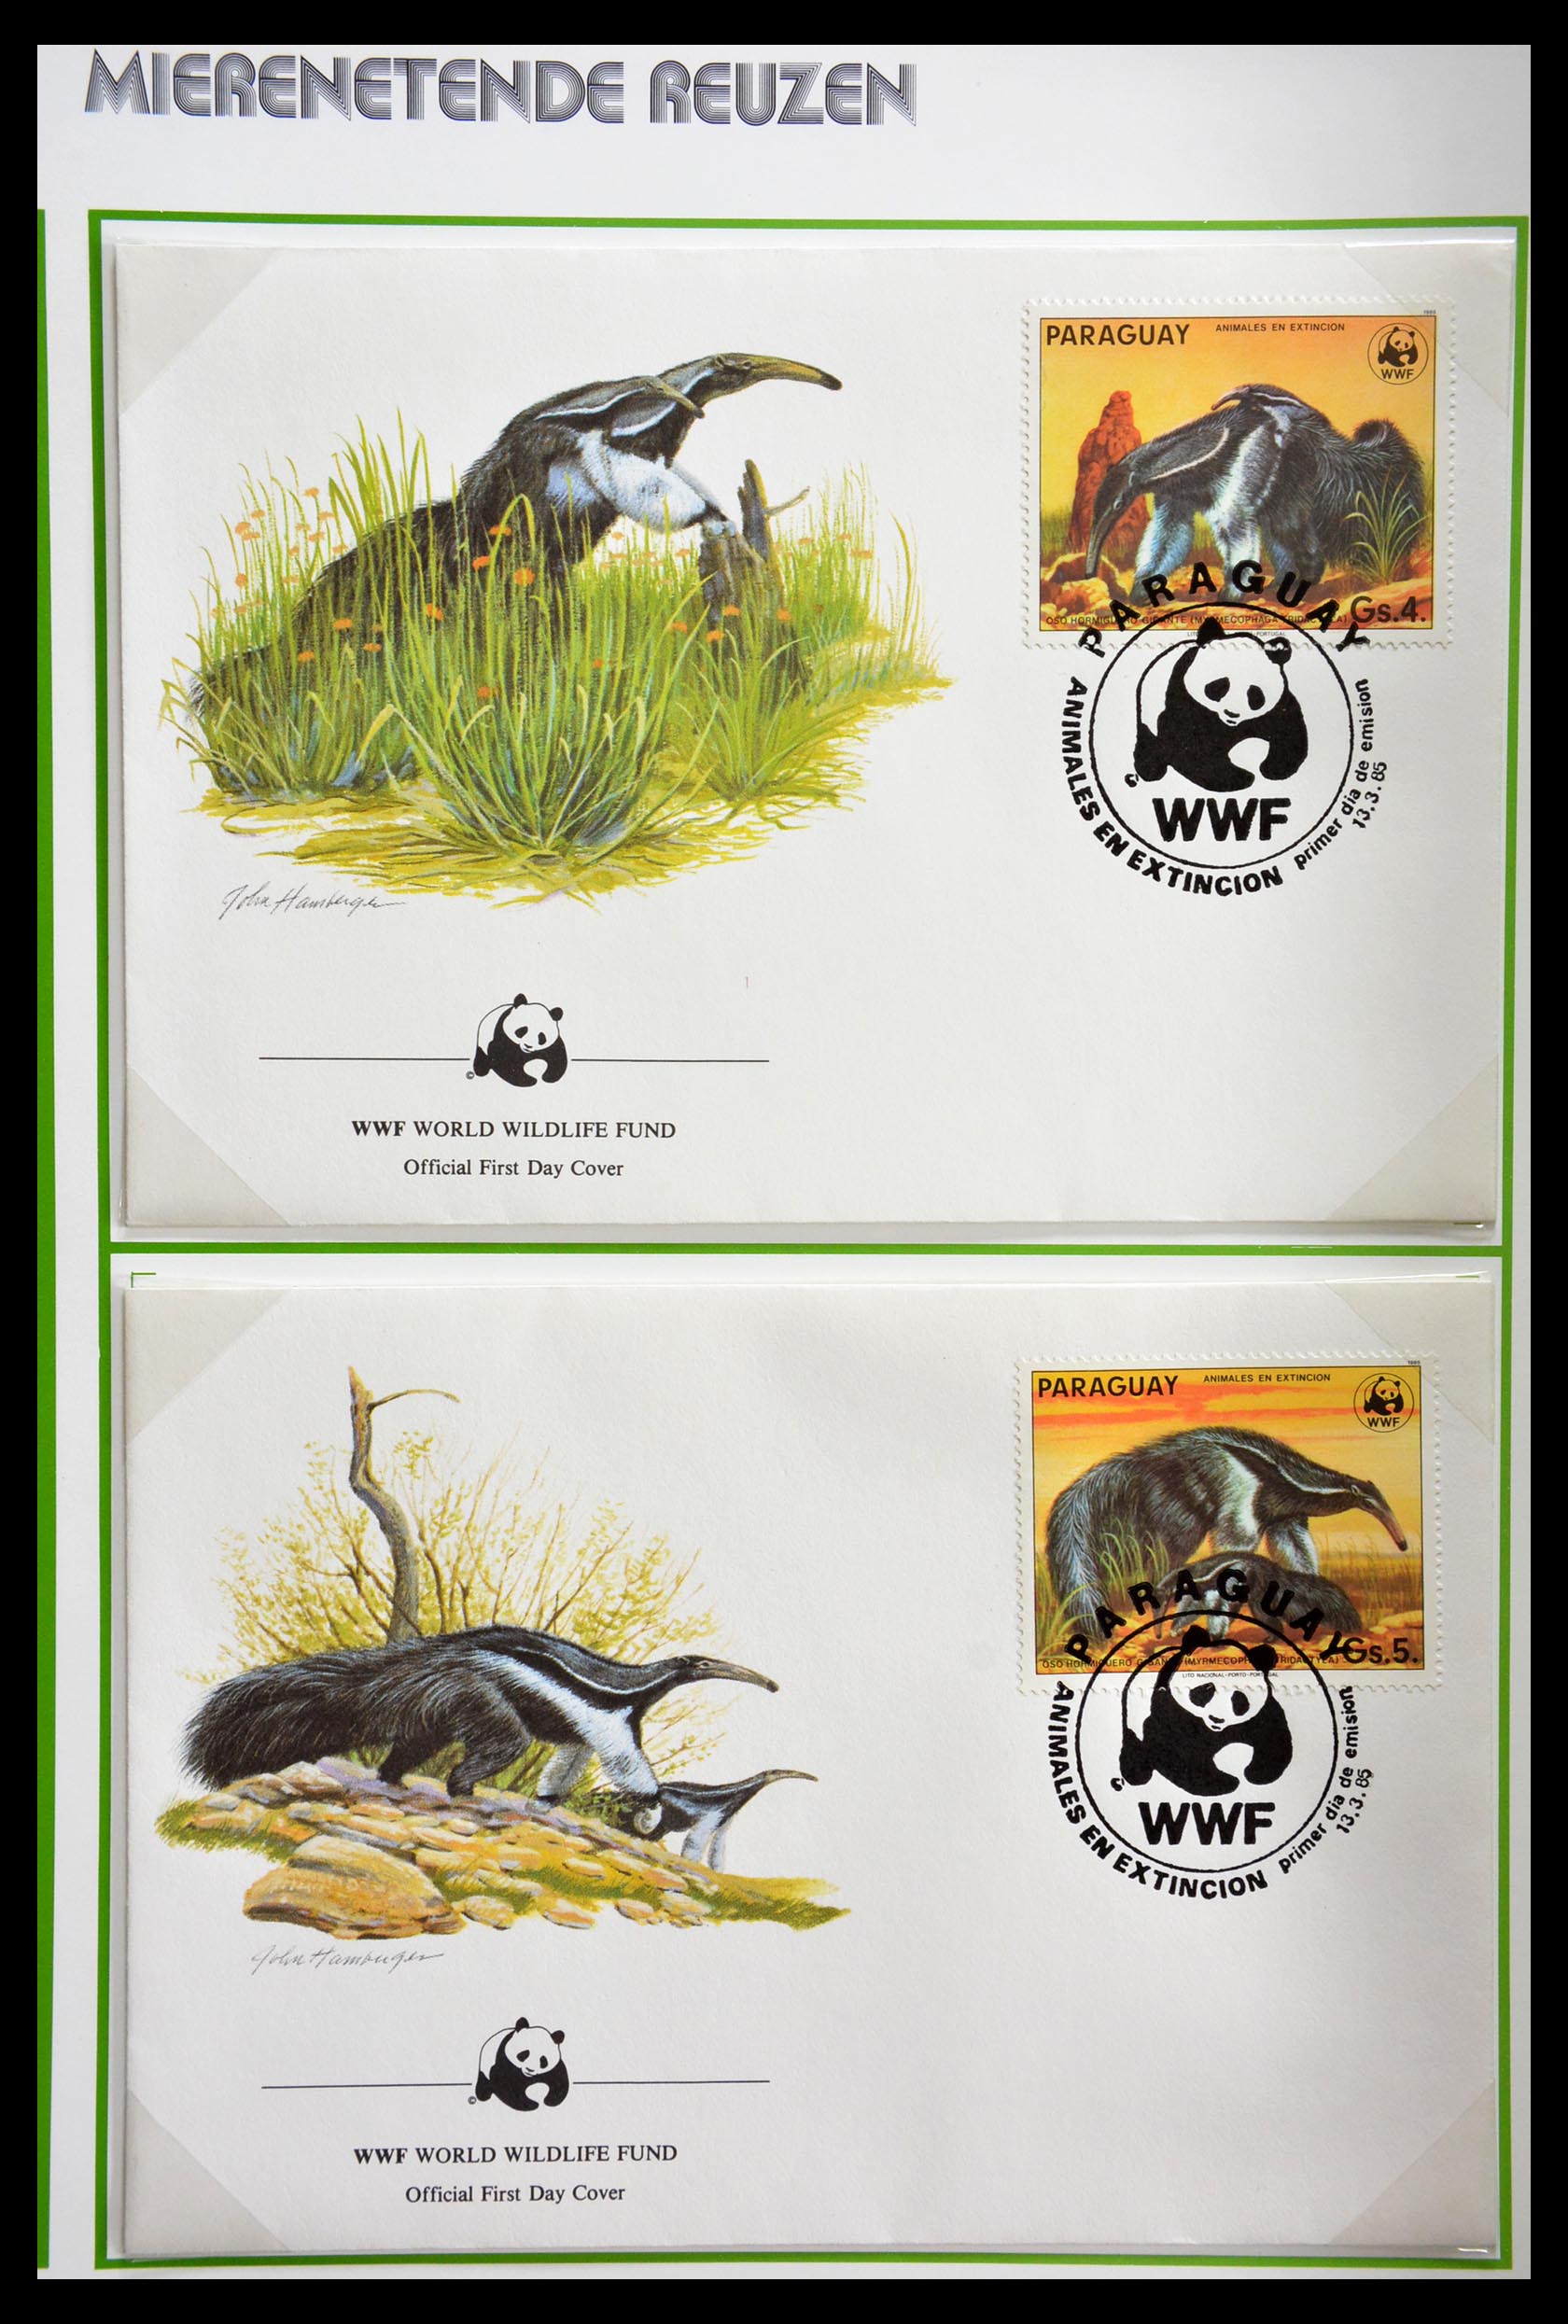 29052 006 - 29052 WWF 1983-2003.